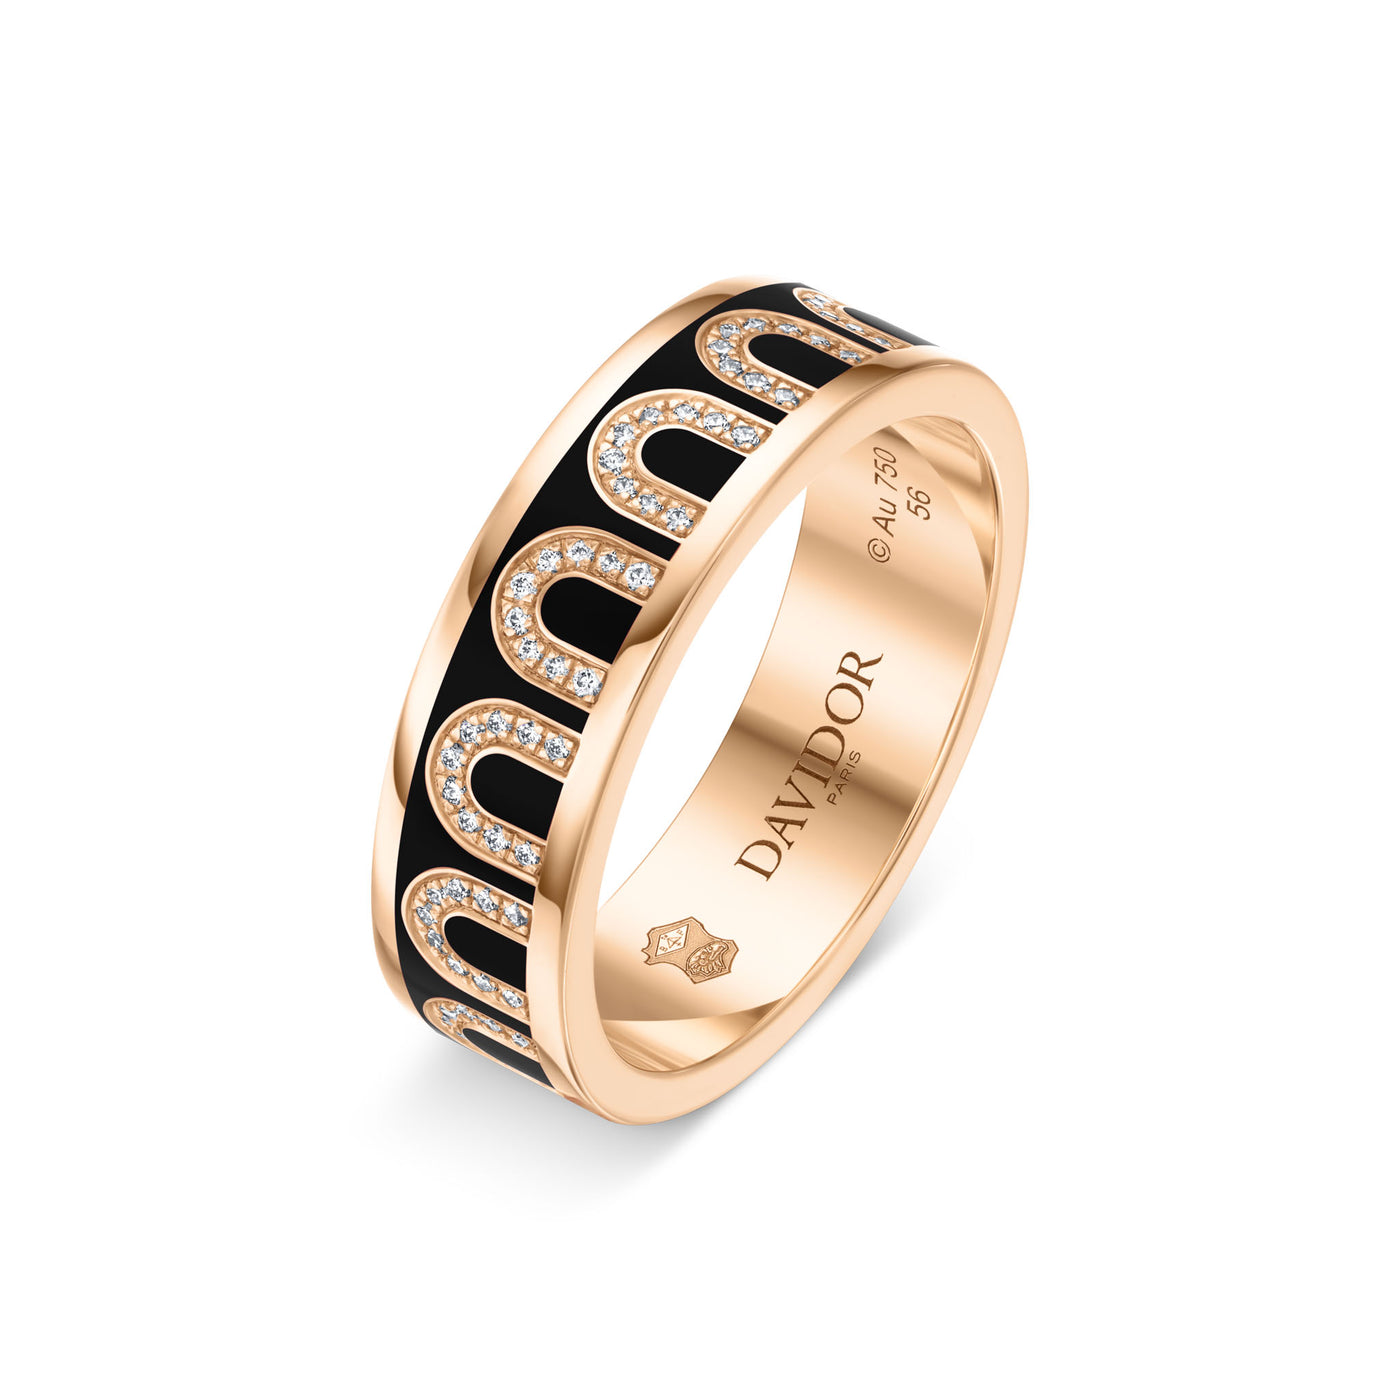 L'Arc de DAVIDOR Ring MM, 18k Rose Gold with Caviar Lacquered Ceramic and Arcade Diamonds - DAVIDOR